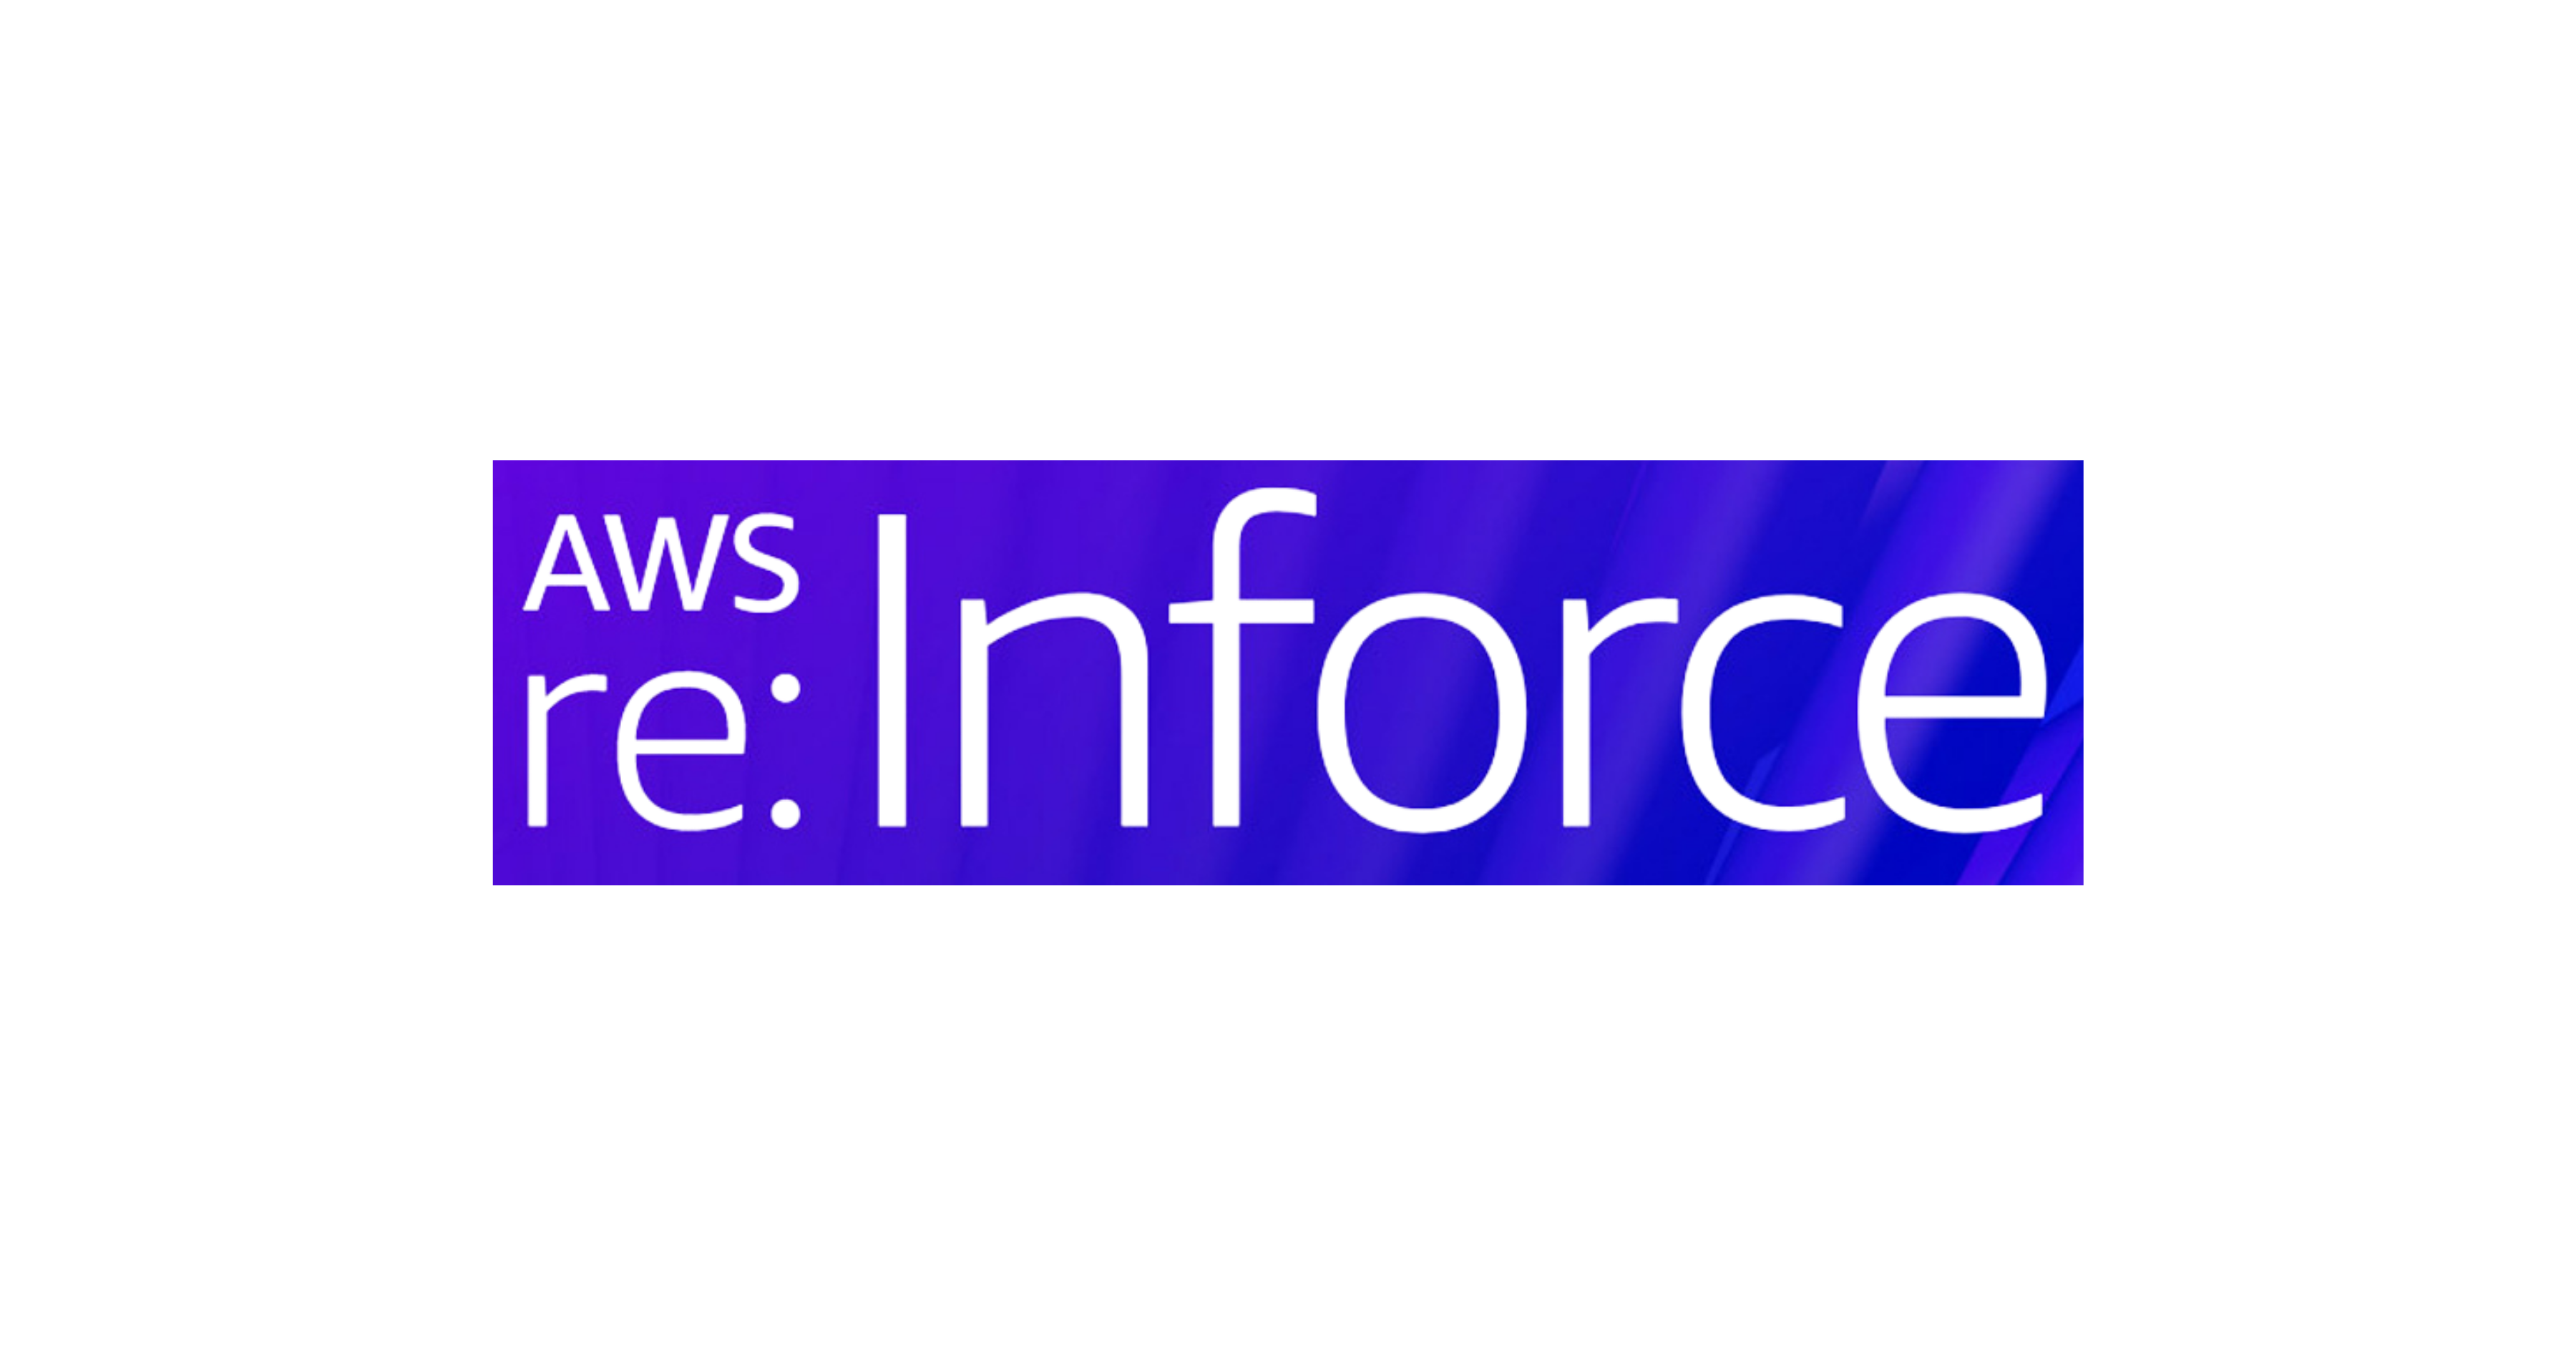 Reinforce Promo Image (2)